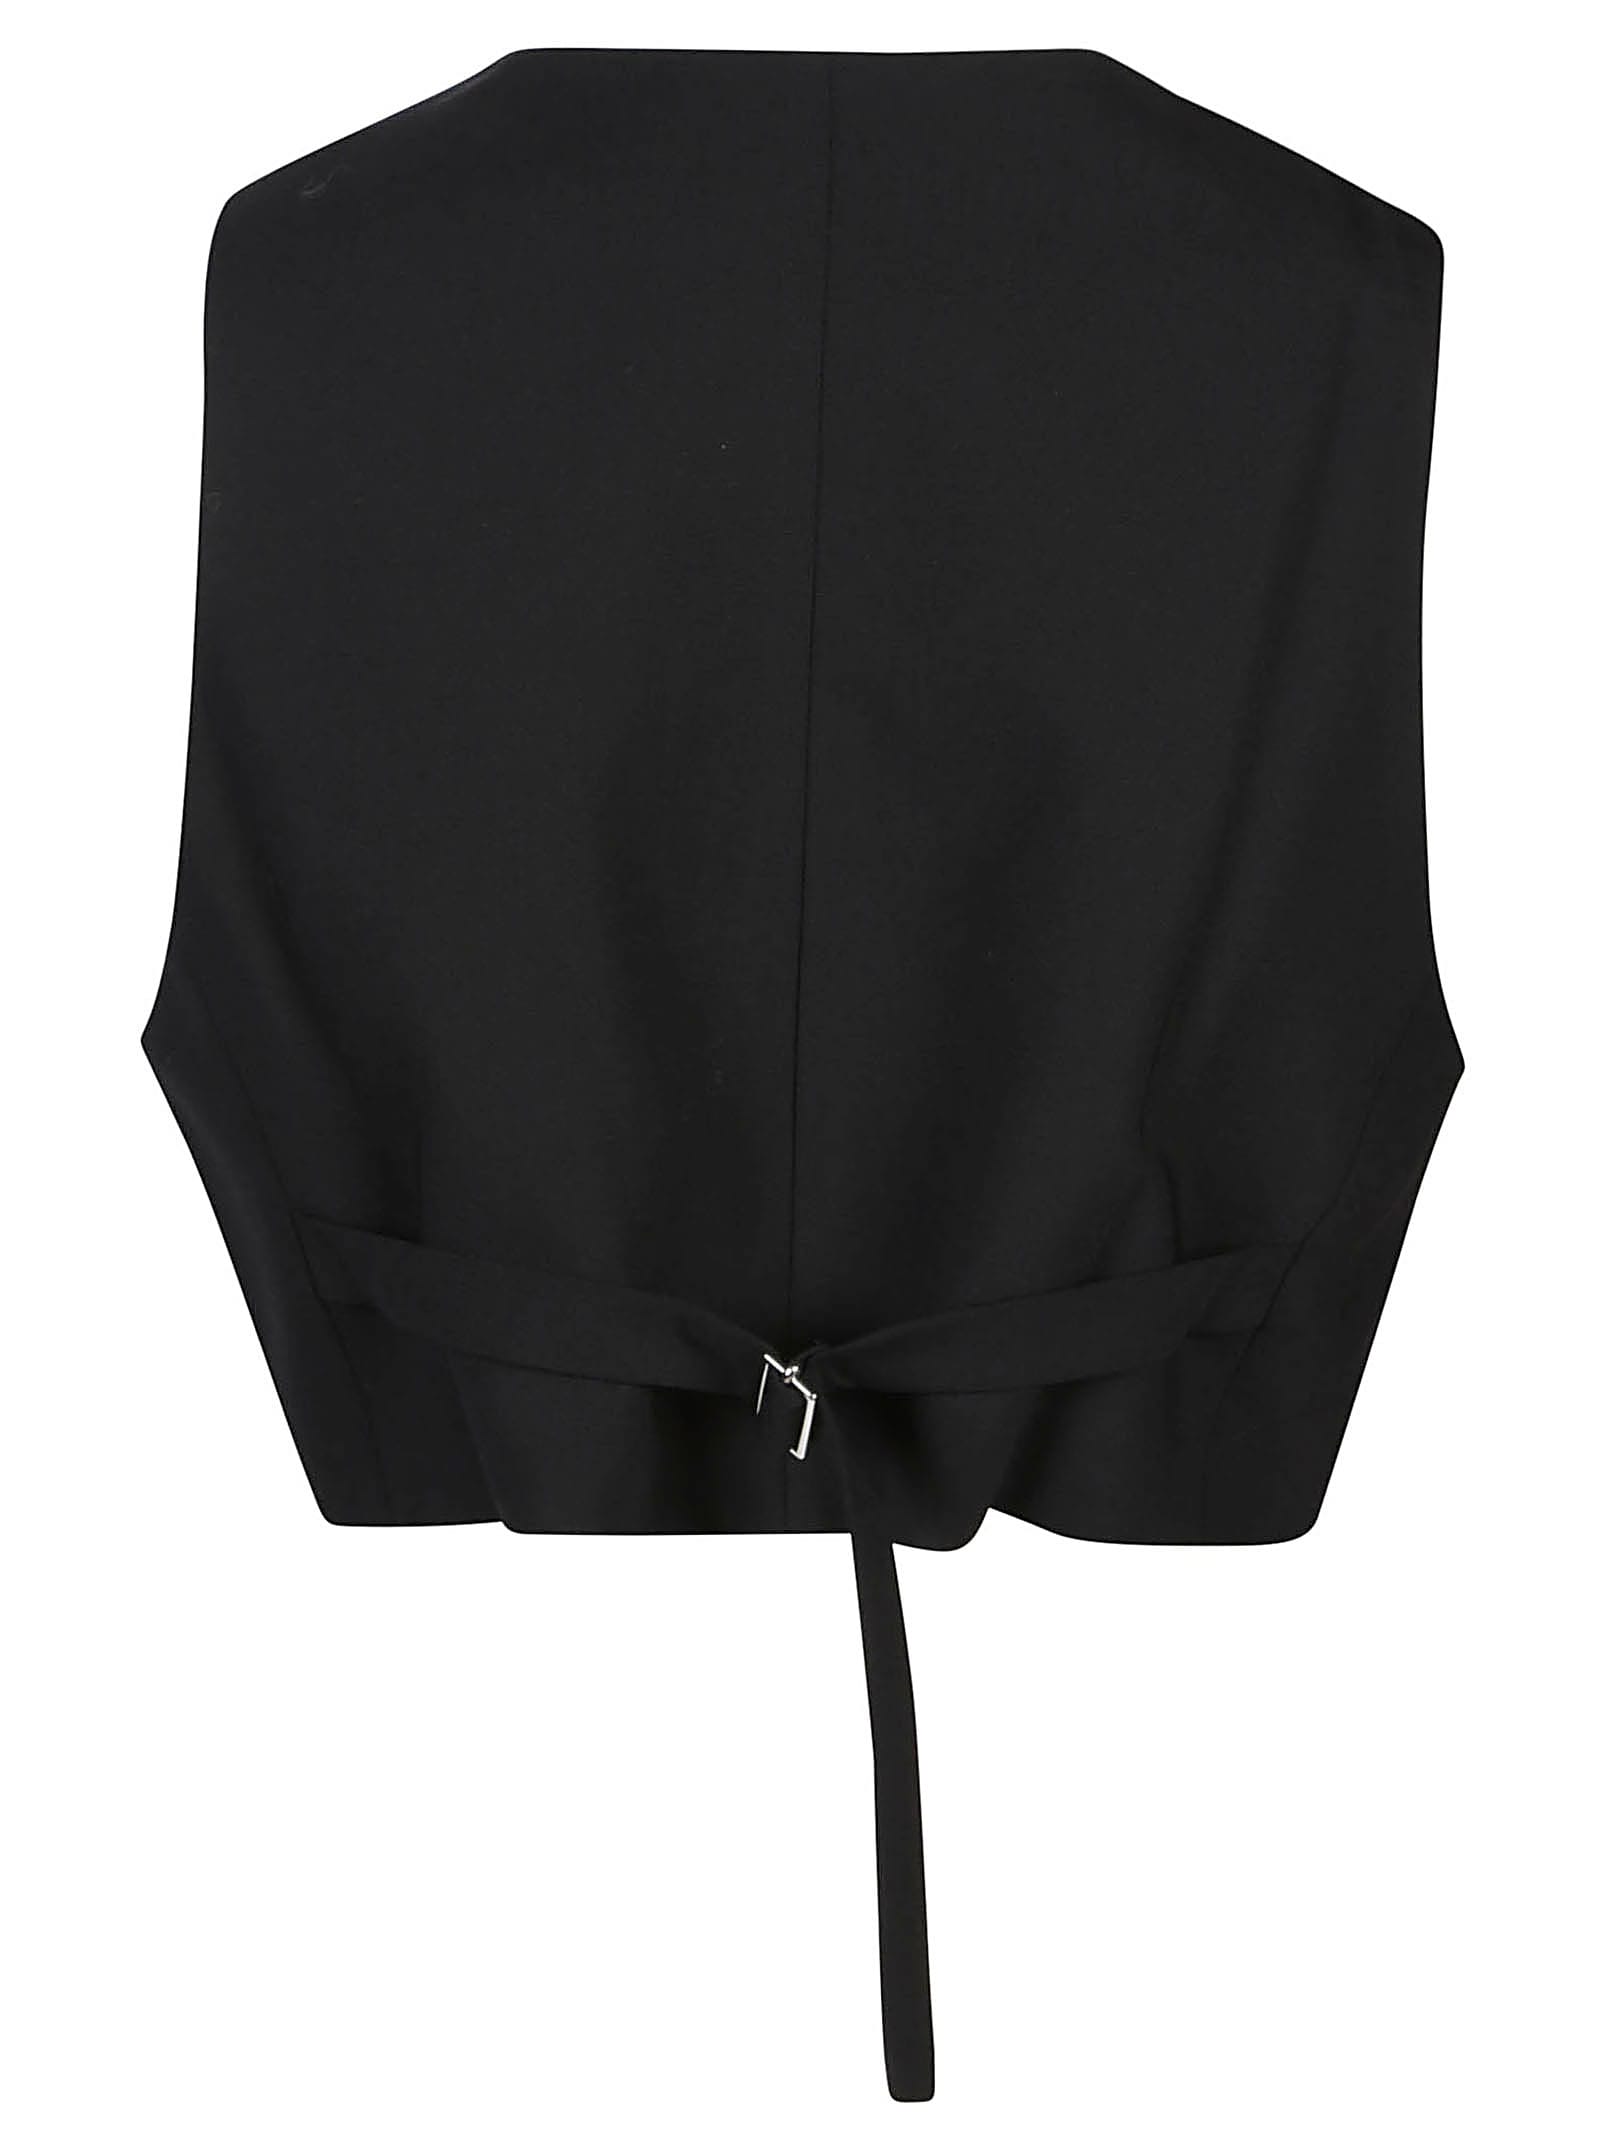 Shop The Andamane Nadine Vest In Black